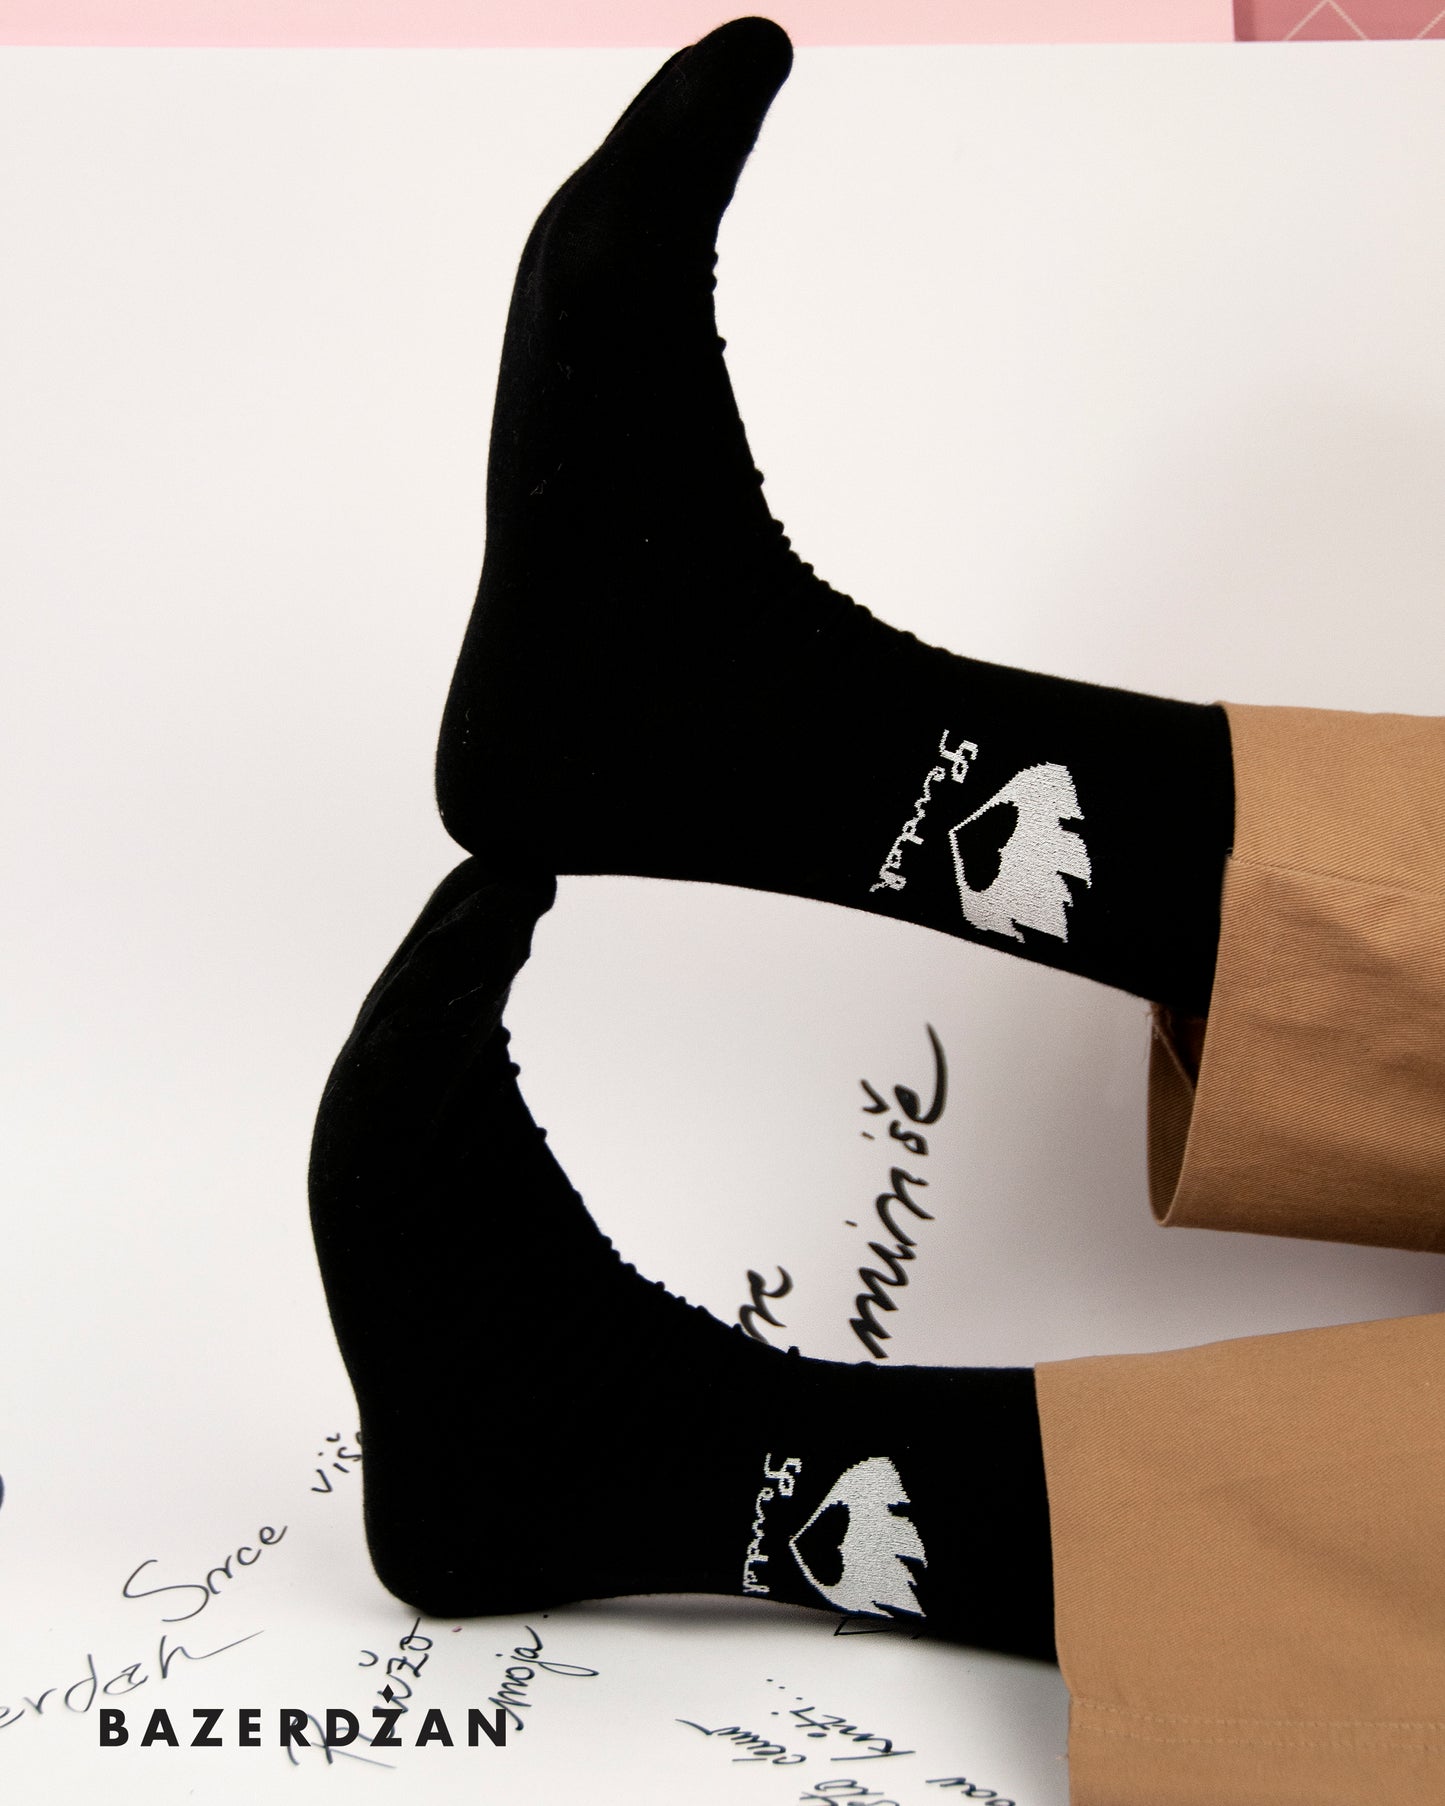 "Sevdah" Socks by Bazerdzan Wear